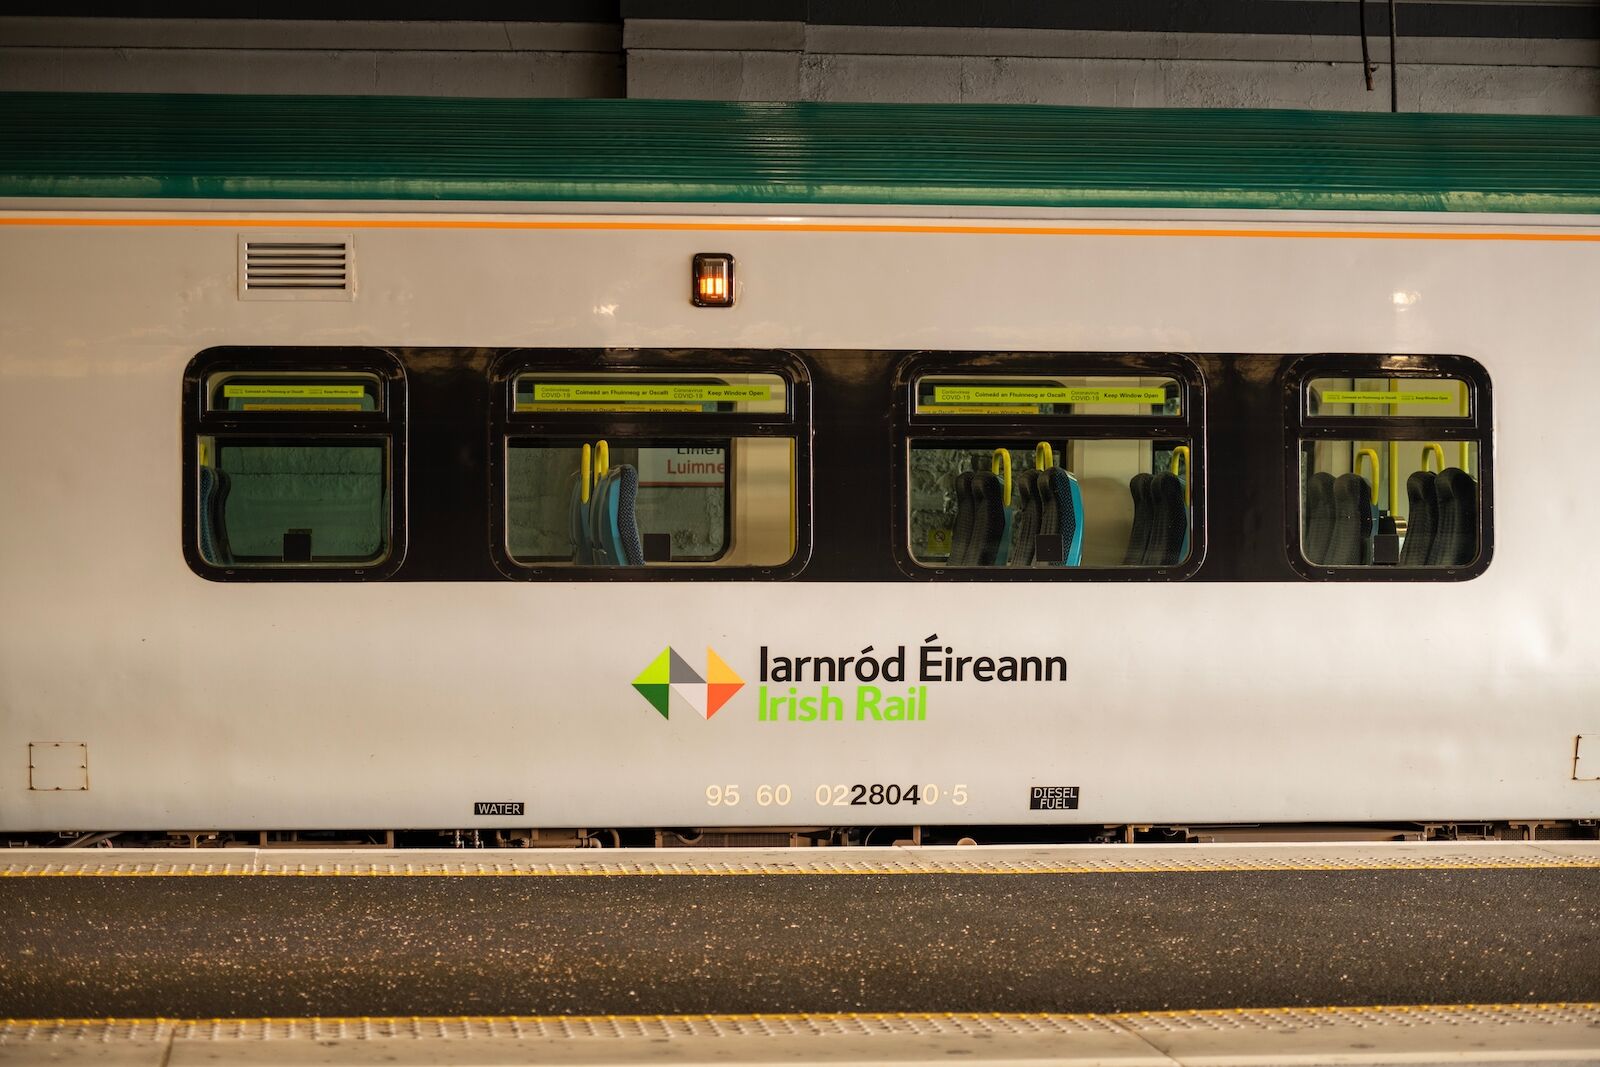 Irish train waiting in a station